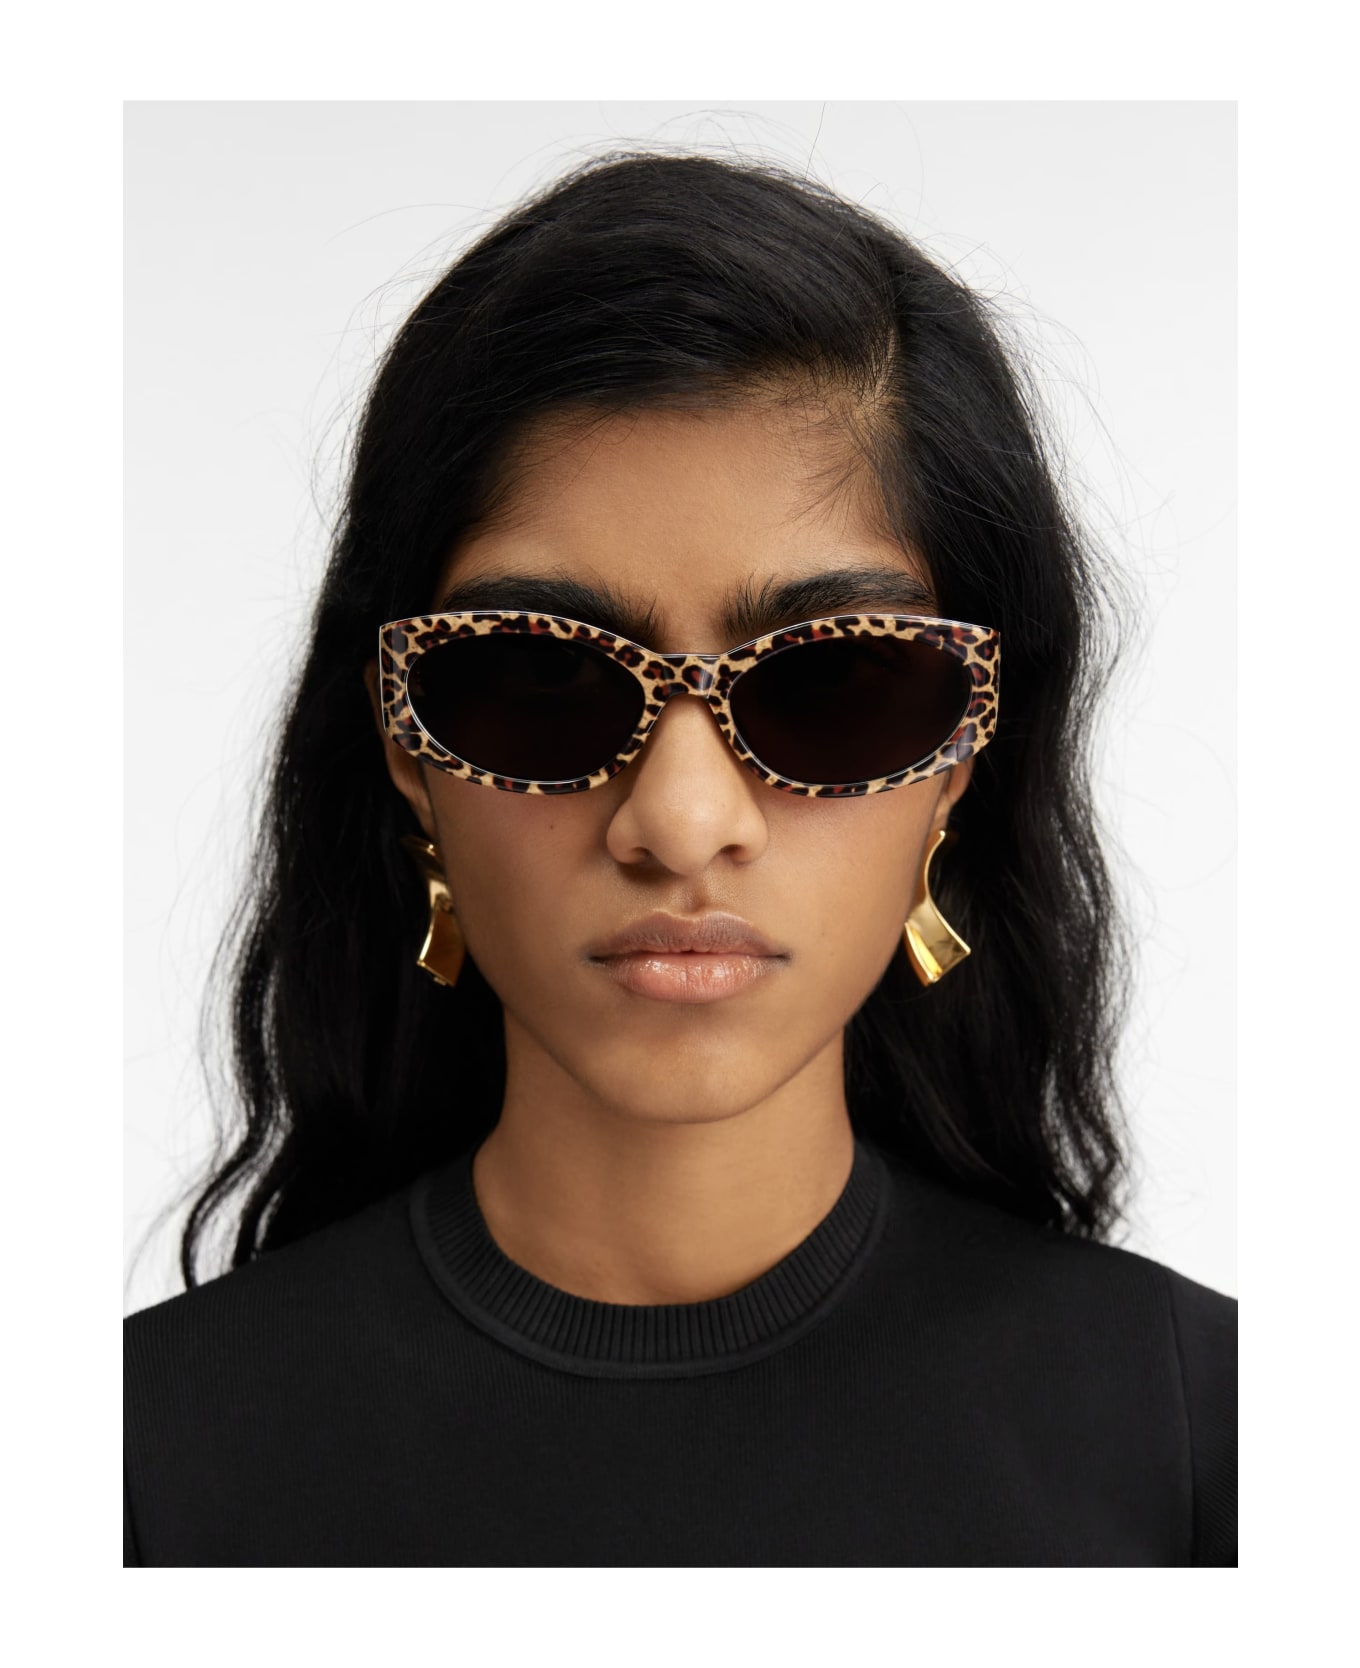 Jacquemus Ovalo - Leopard Sunglasses - brown サングラス